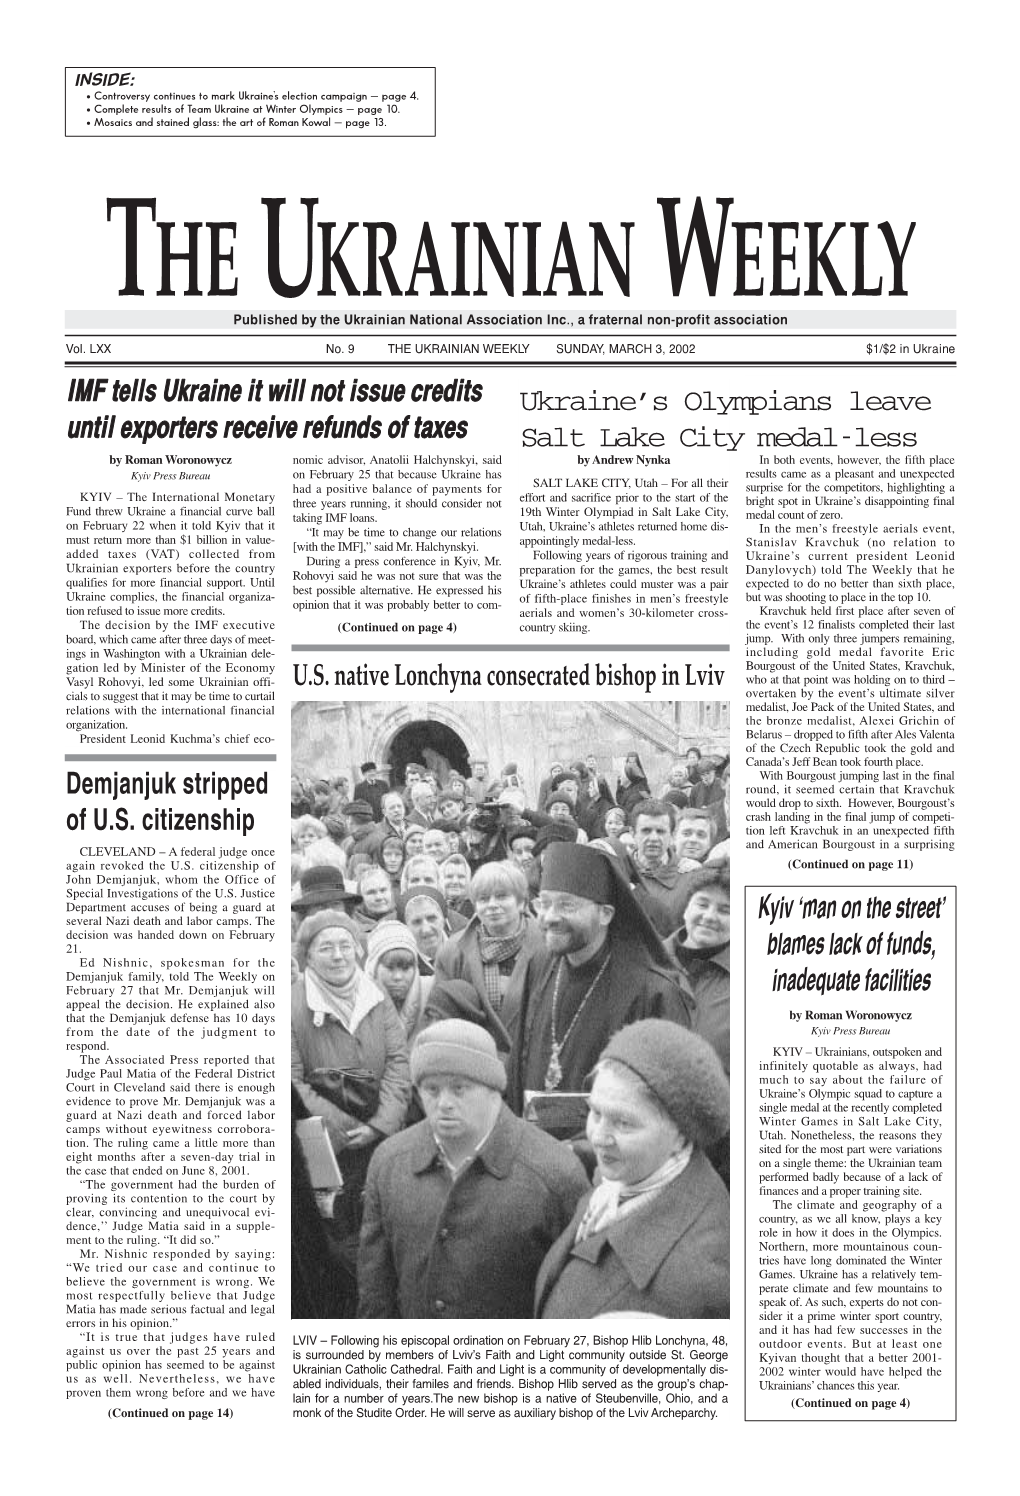 The Ukrainian Weekly 2002, No.9